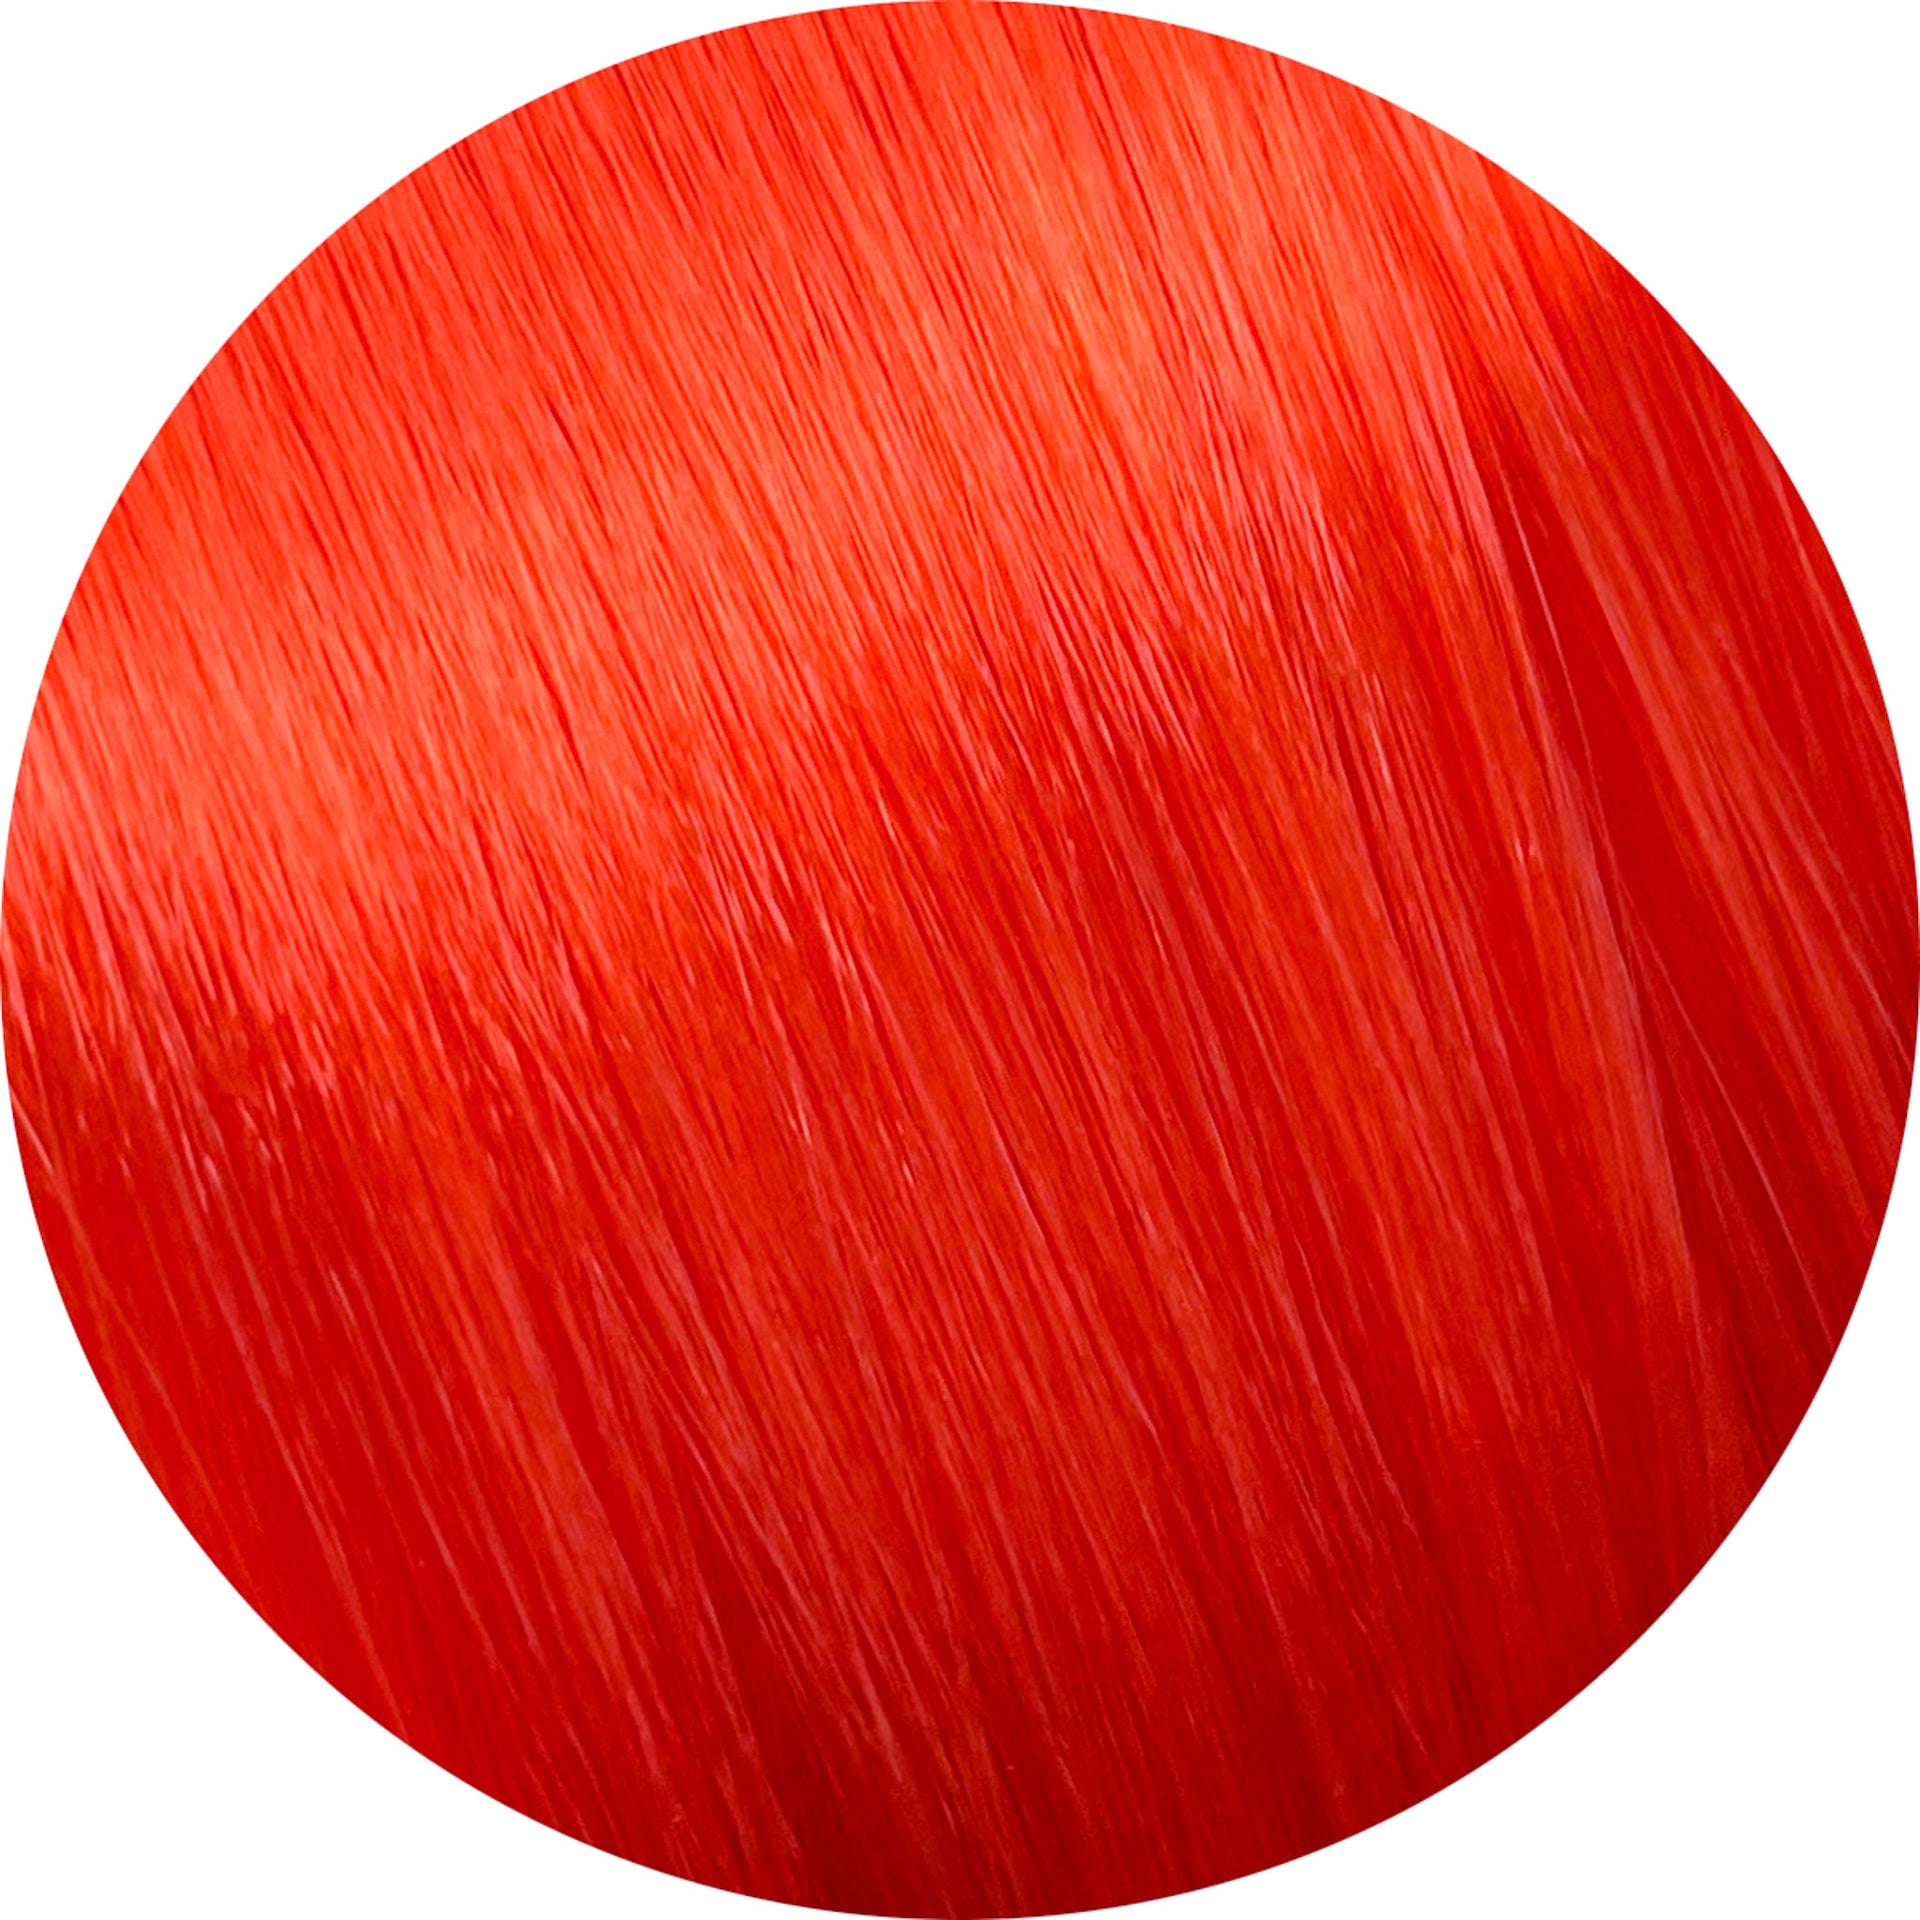 Desire Red - Nylon Doll Hair for Rerooting Custom Dolls, Doll